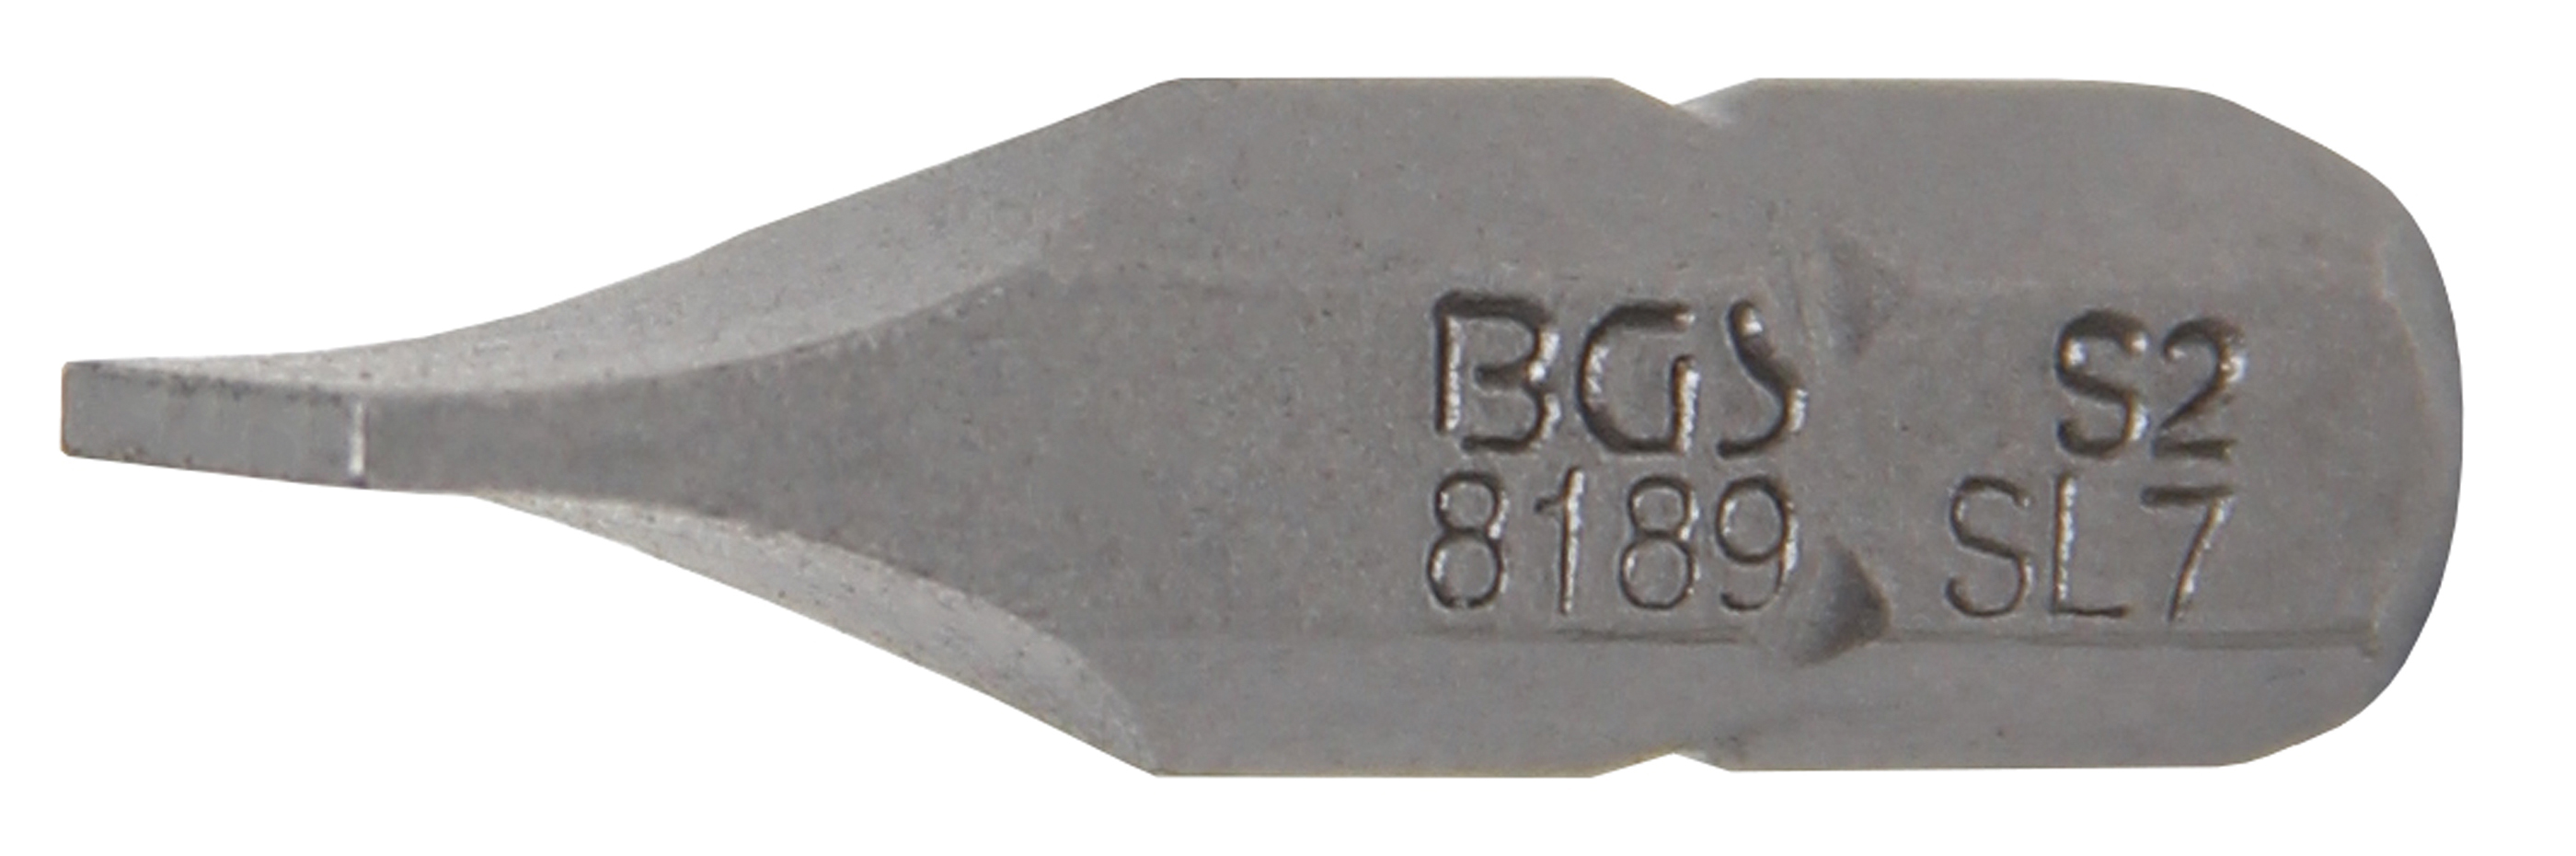 BGS 8189 Bit cu canelura 7 mm, 1/4"